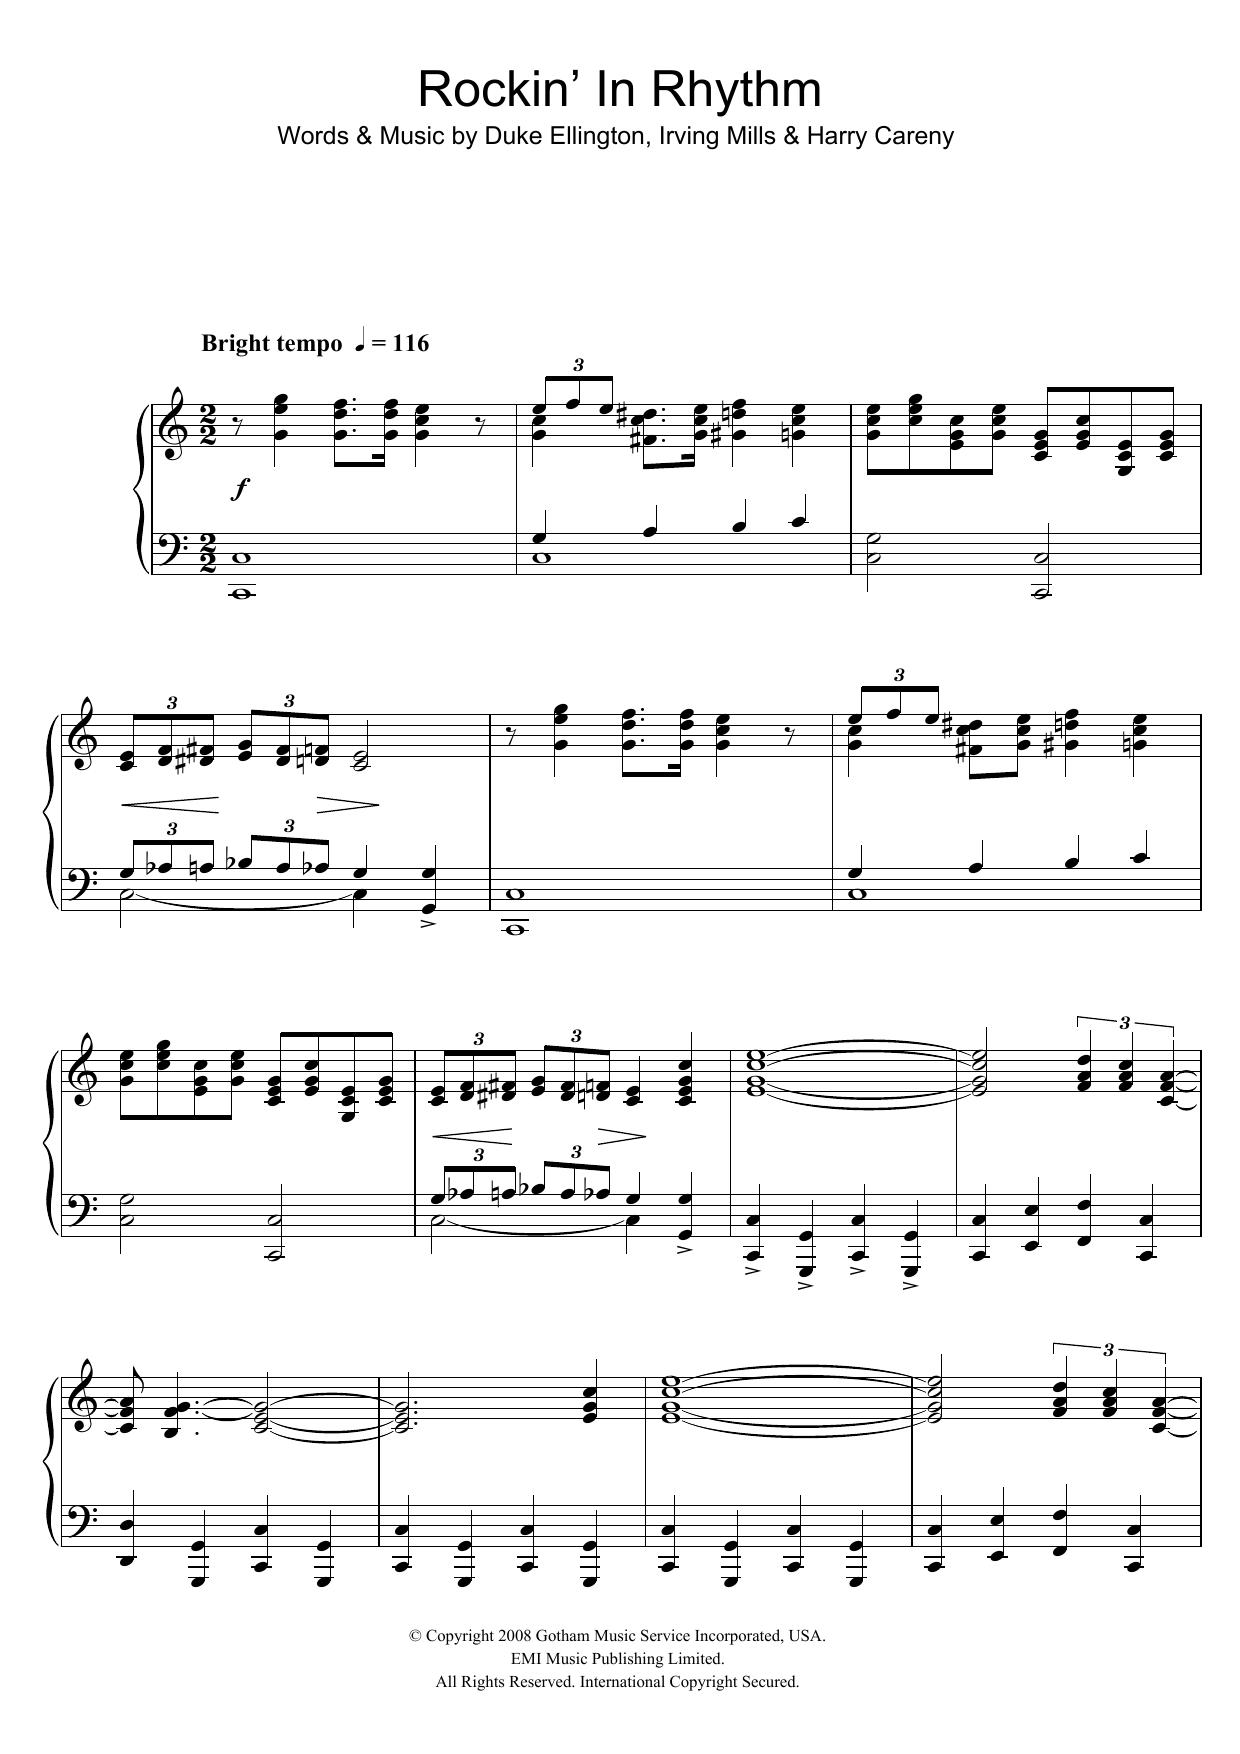 Duke Ellington Rockin' In Rhythm Sheet Music Notes & Chords for Piano - Download or Print PDF